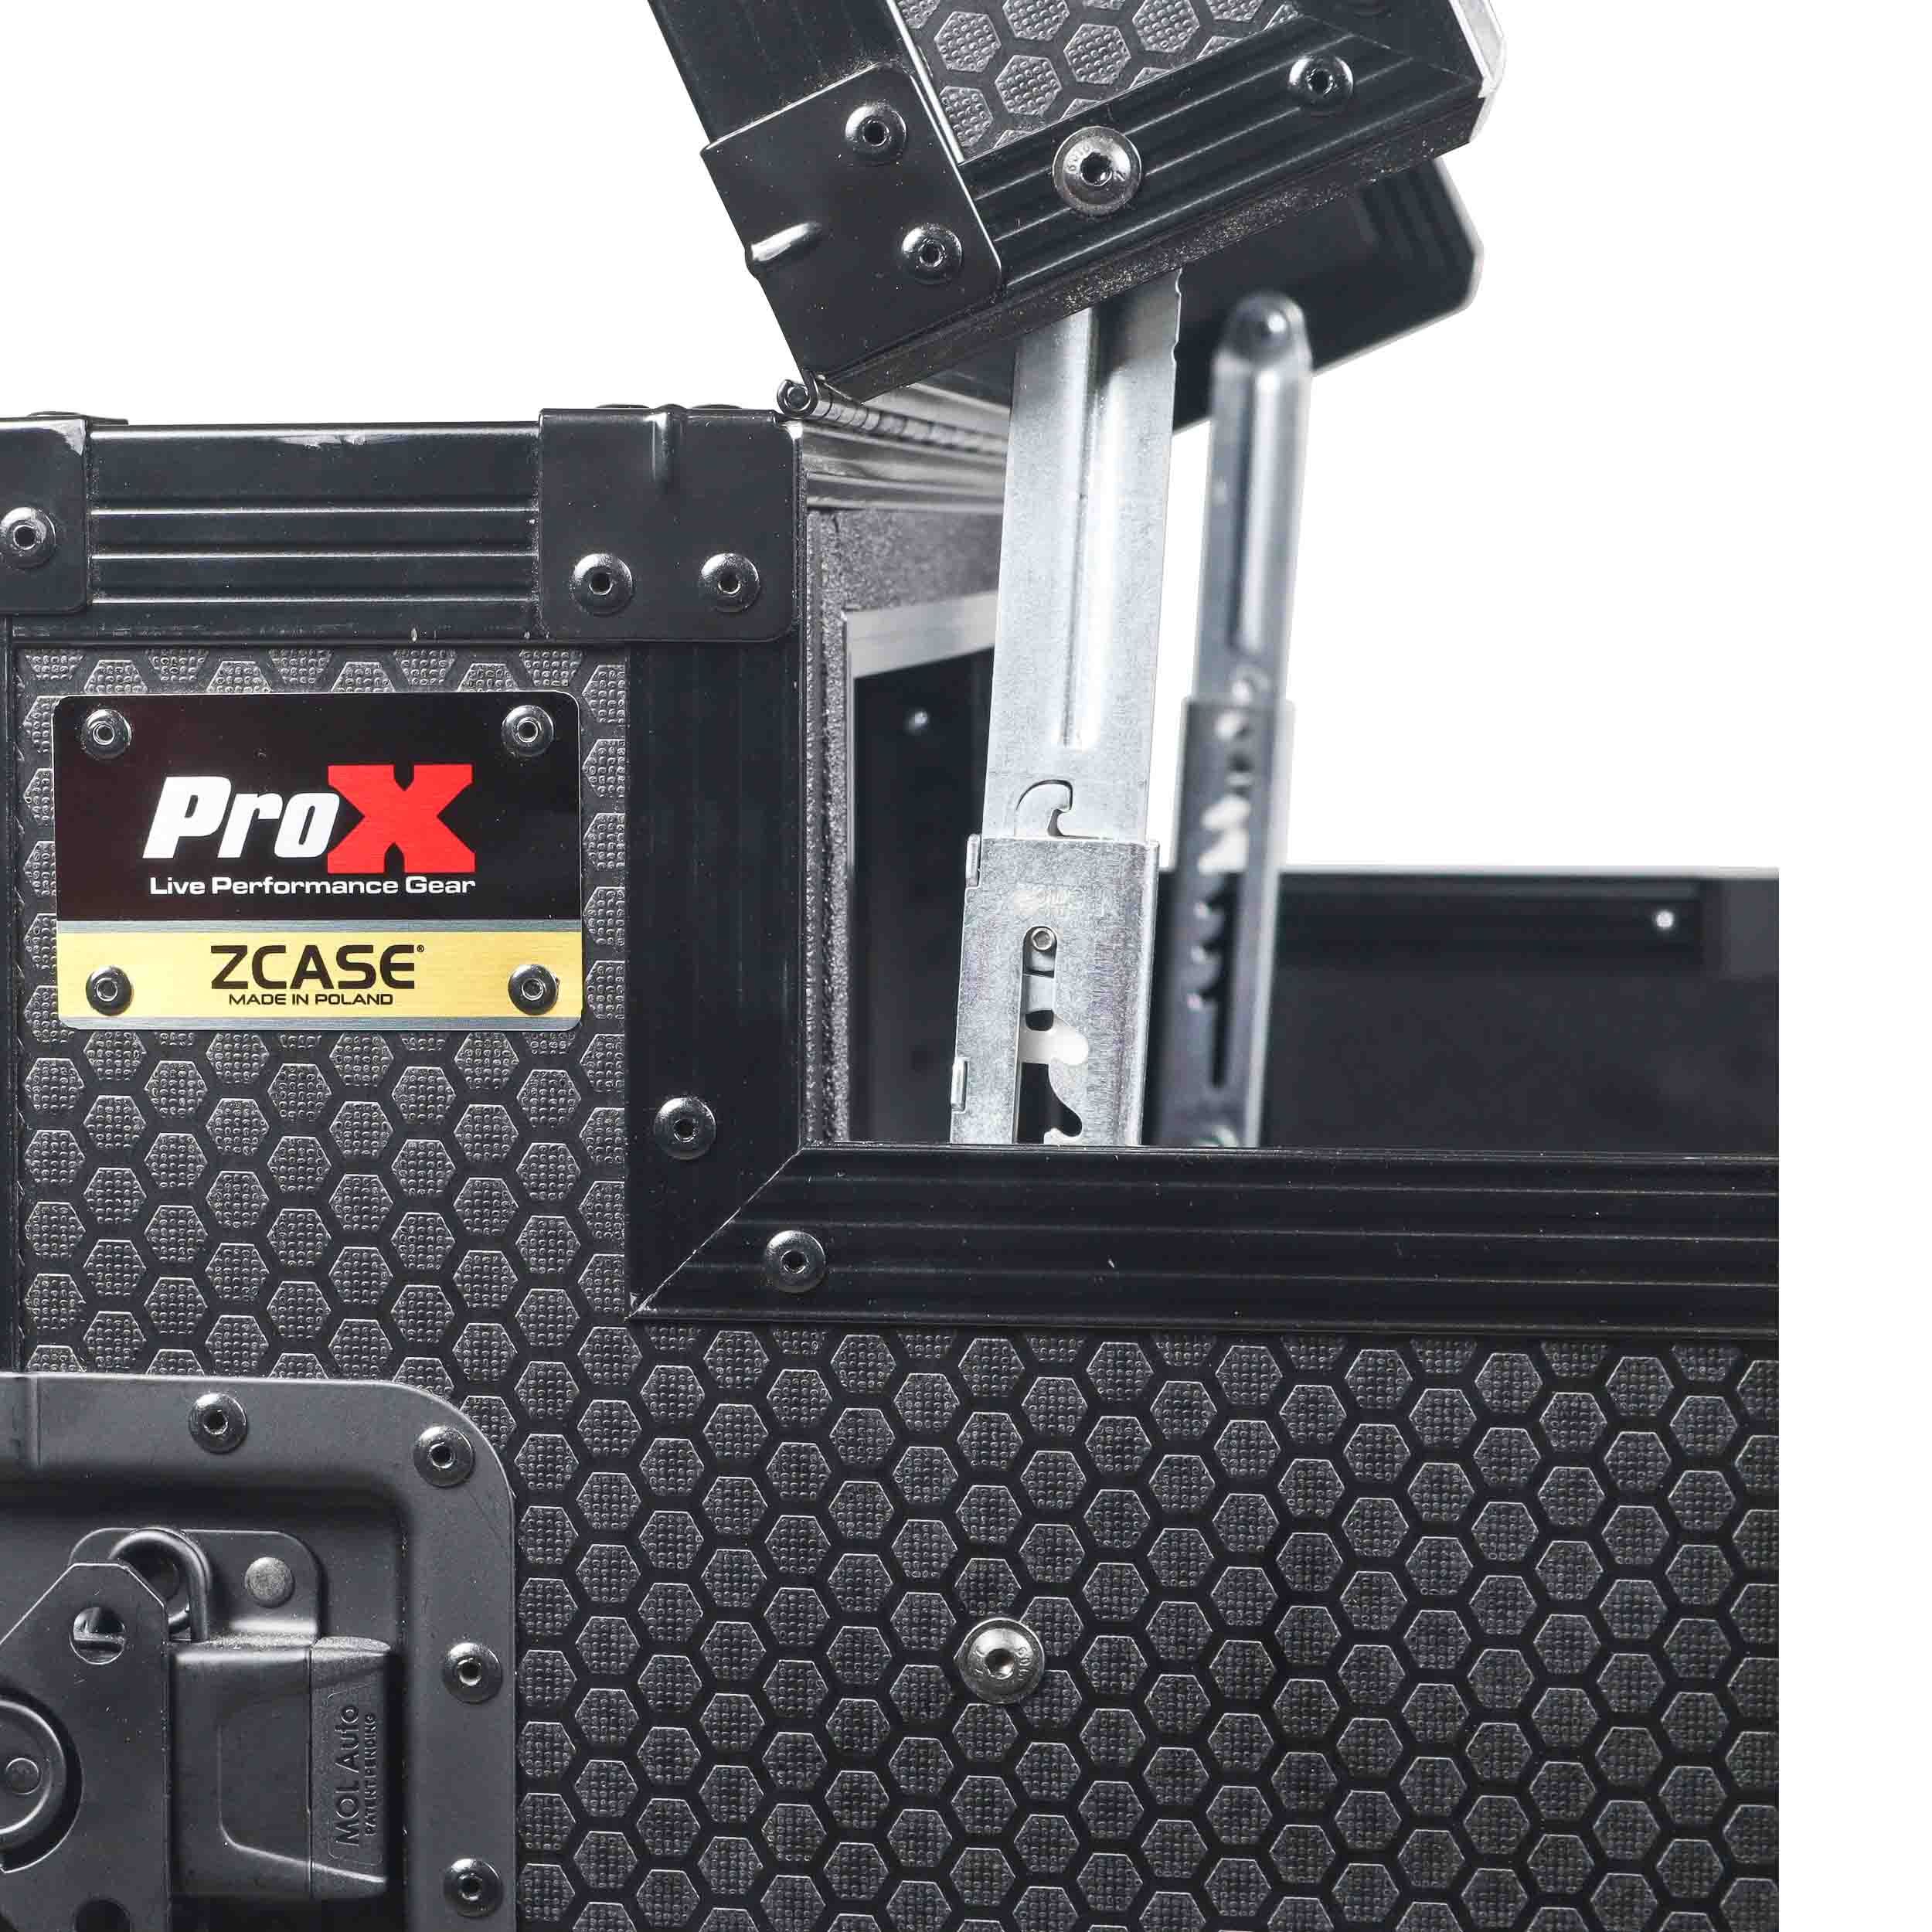 ProX XZF-AVPRO4U12UBLK, Mobile AV Broadcasting Streaming Recording Studio Workstation Case - Black by ProX Cases